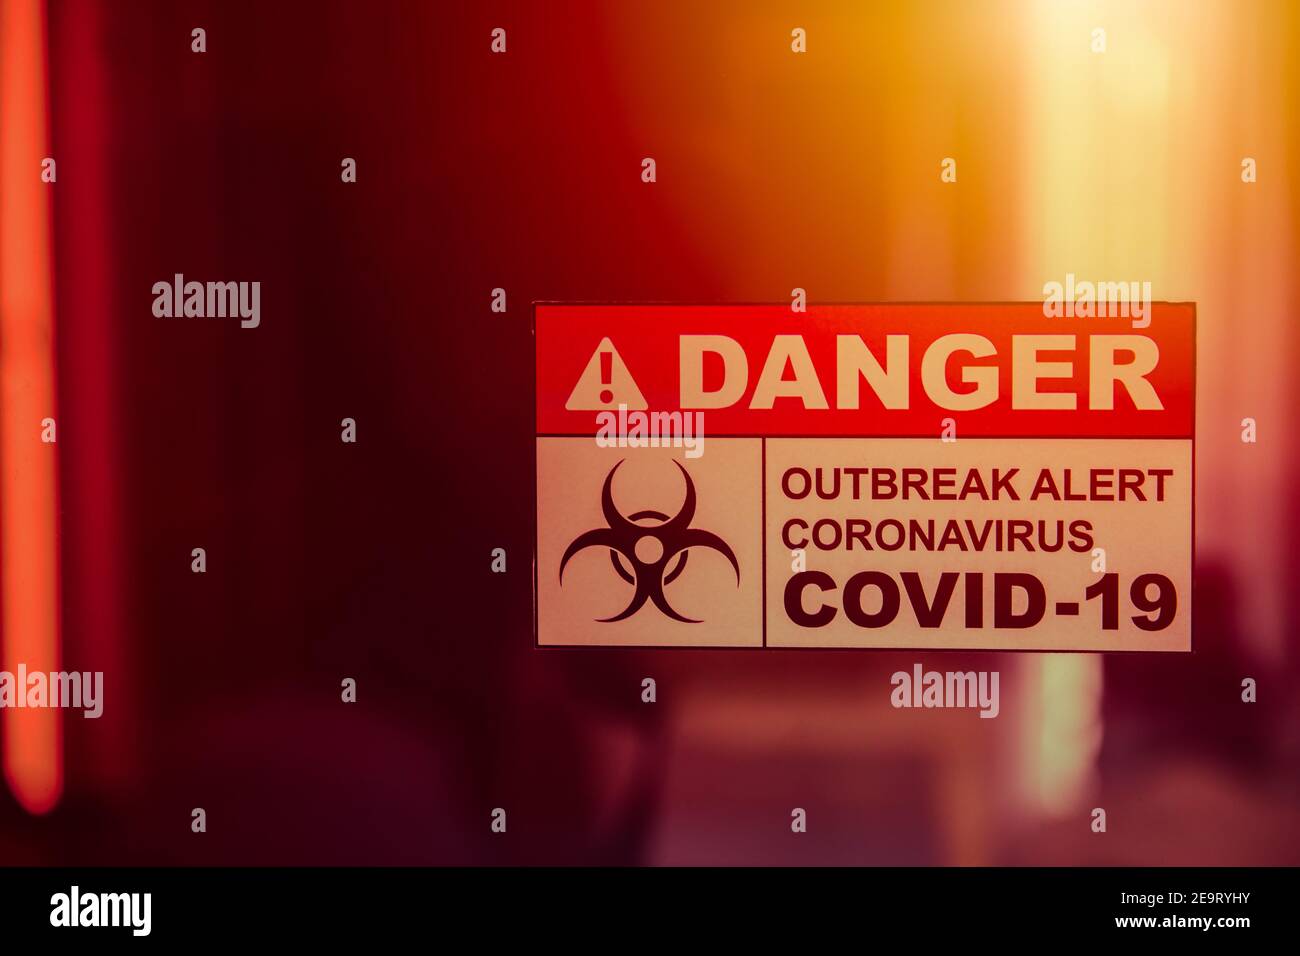 Danger Virus Corona (COVID-19) outbreak area alert Coronavirus tag label red color tone. Stock Photo